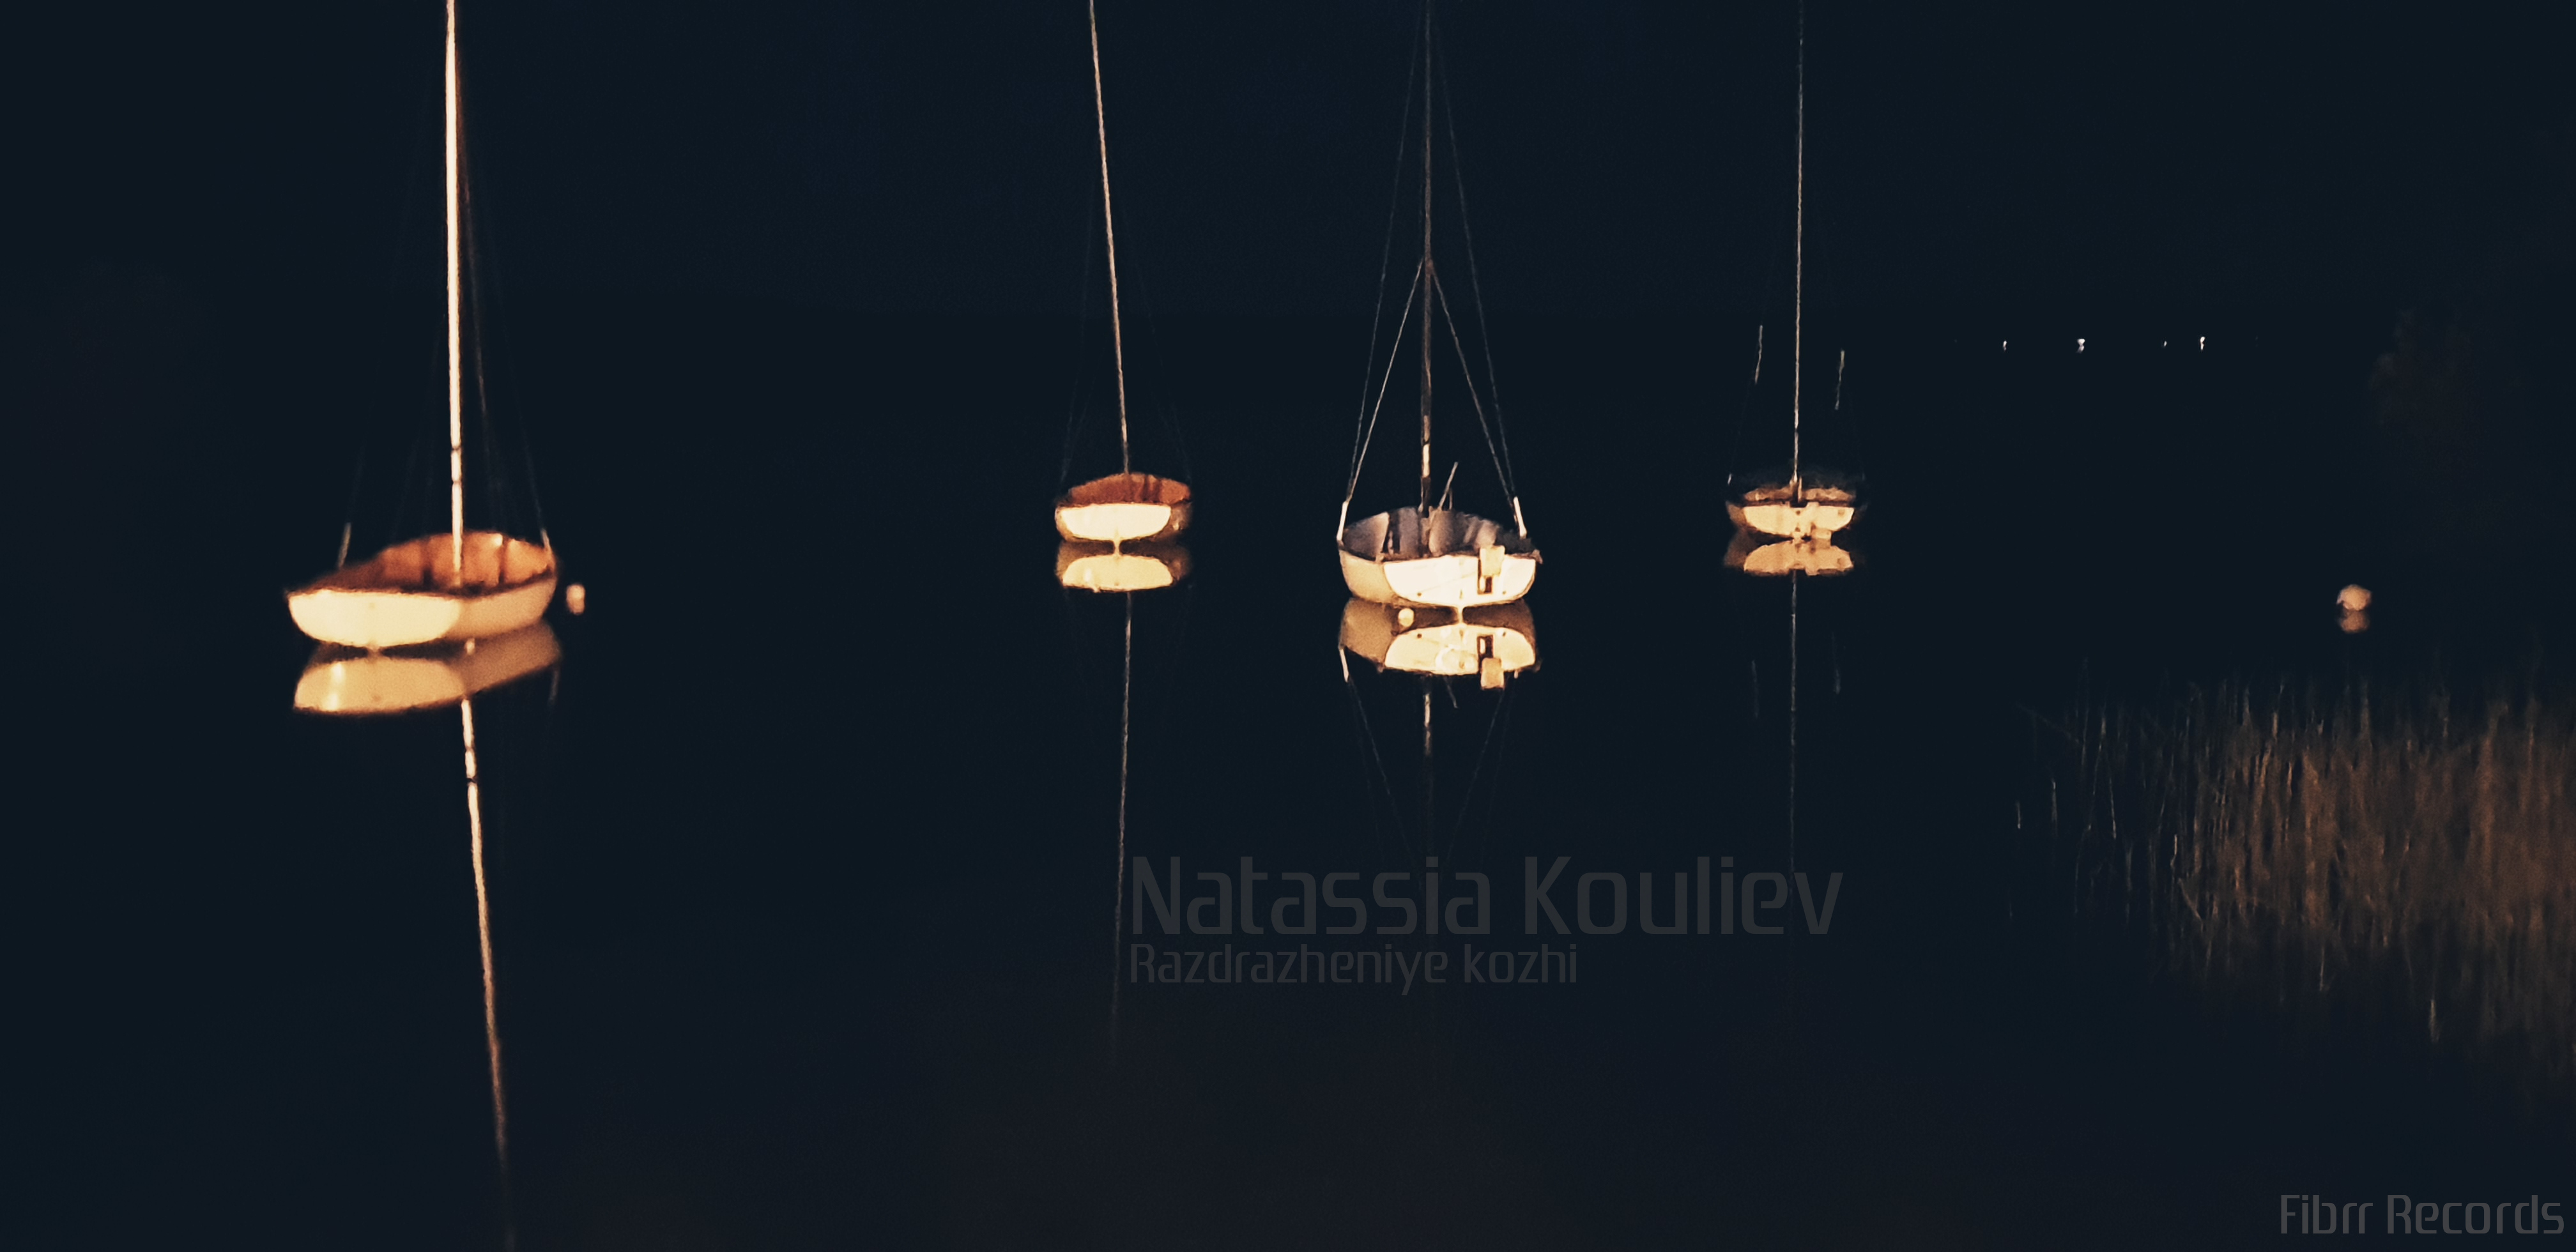 Nouvelle sortie Fibrr Records – NATASSIA KOULIEV – Razdrazheniye kozhi